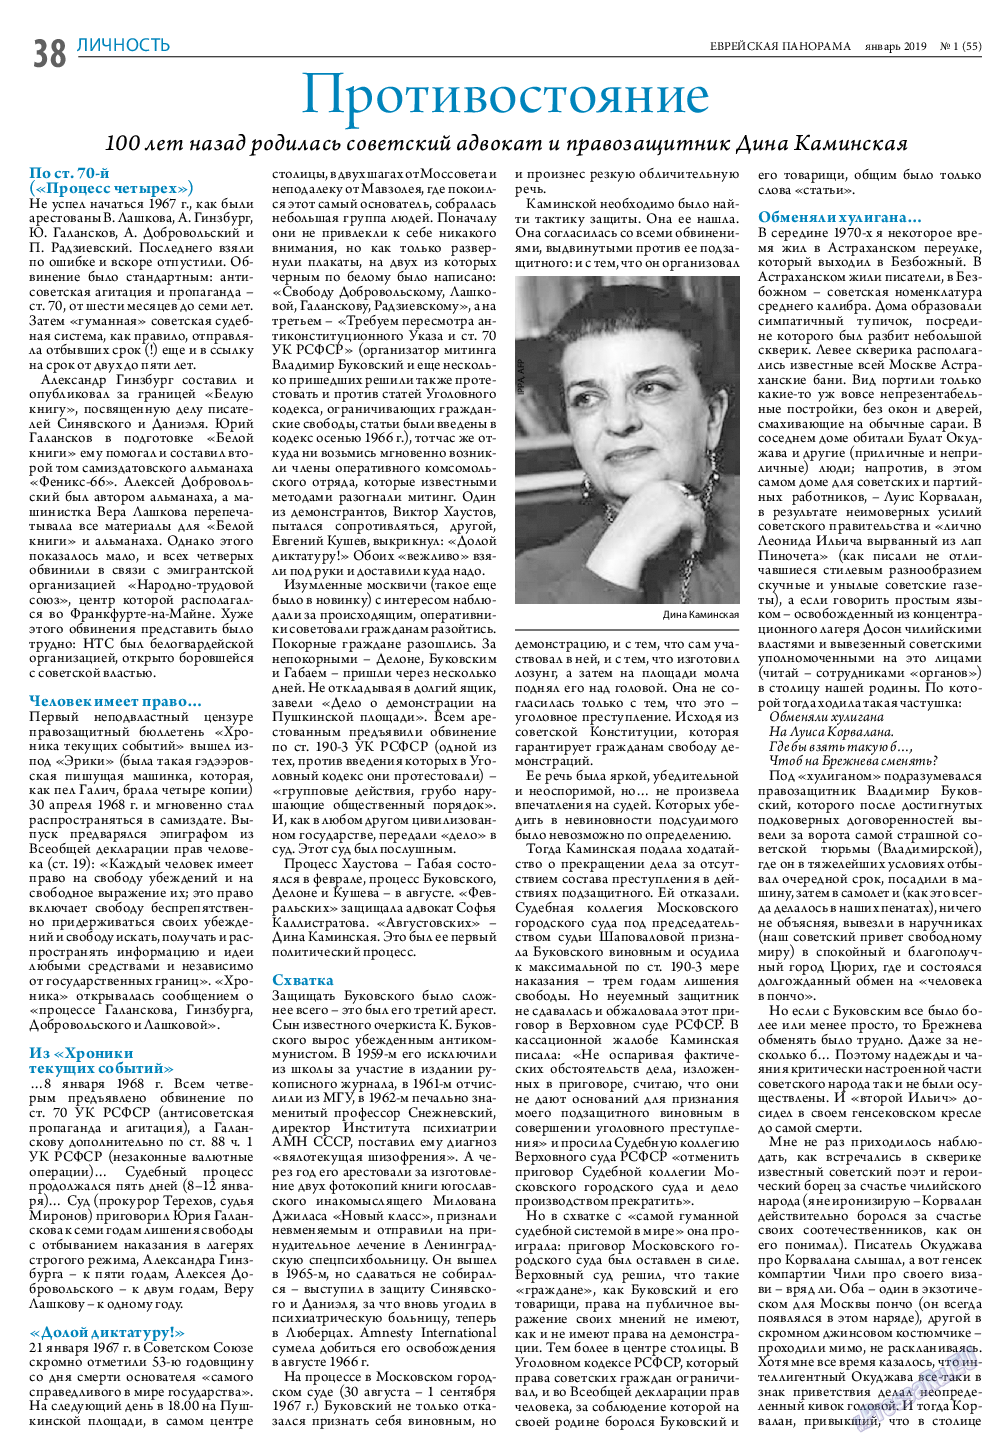 Еврейская панорама, газета. 2019 №1 стр.38